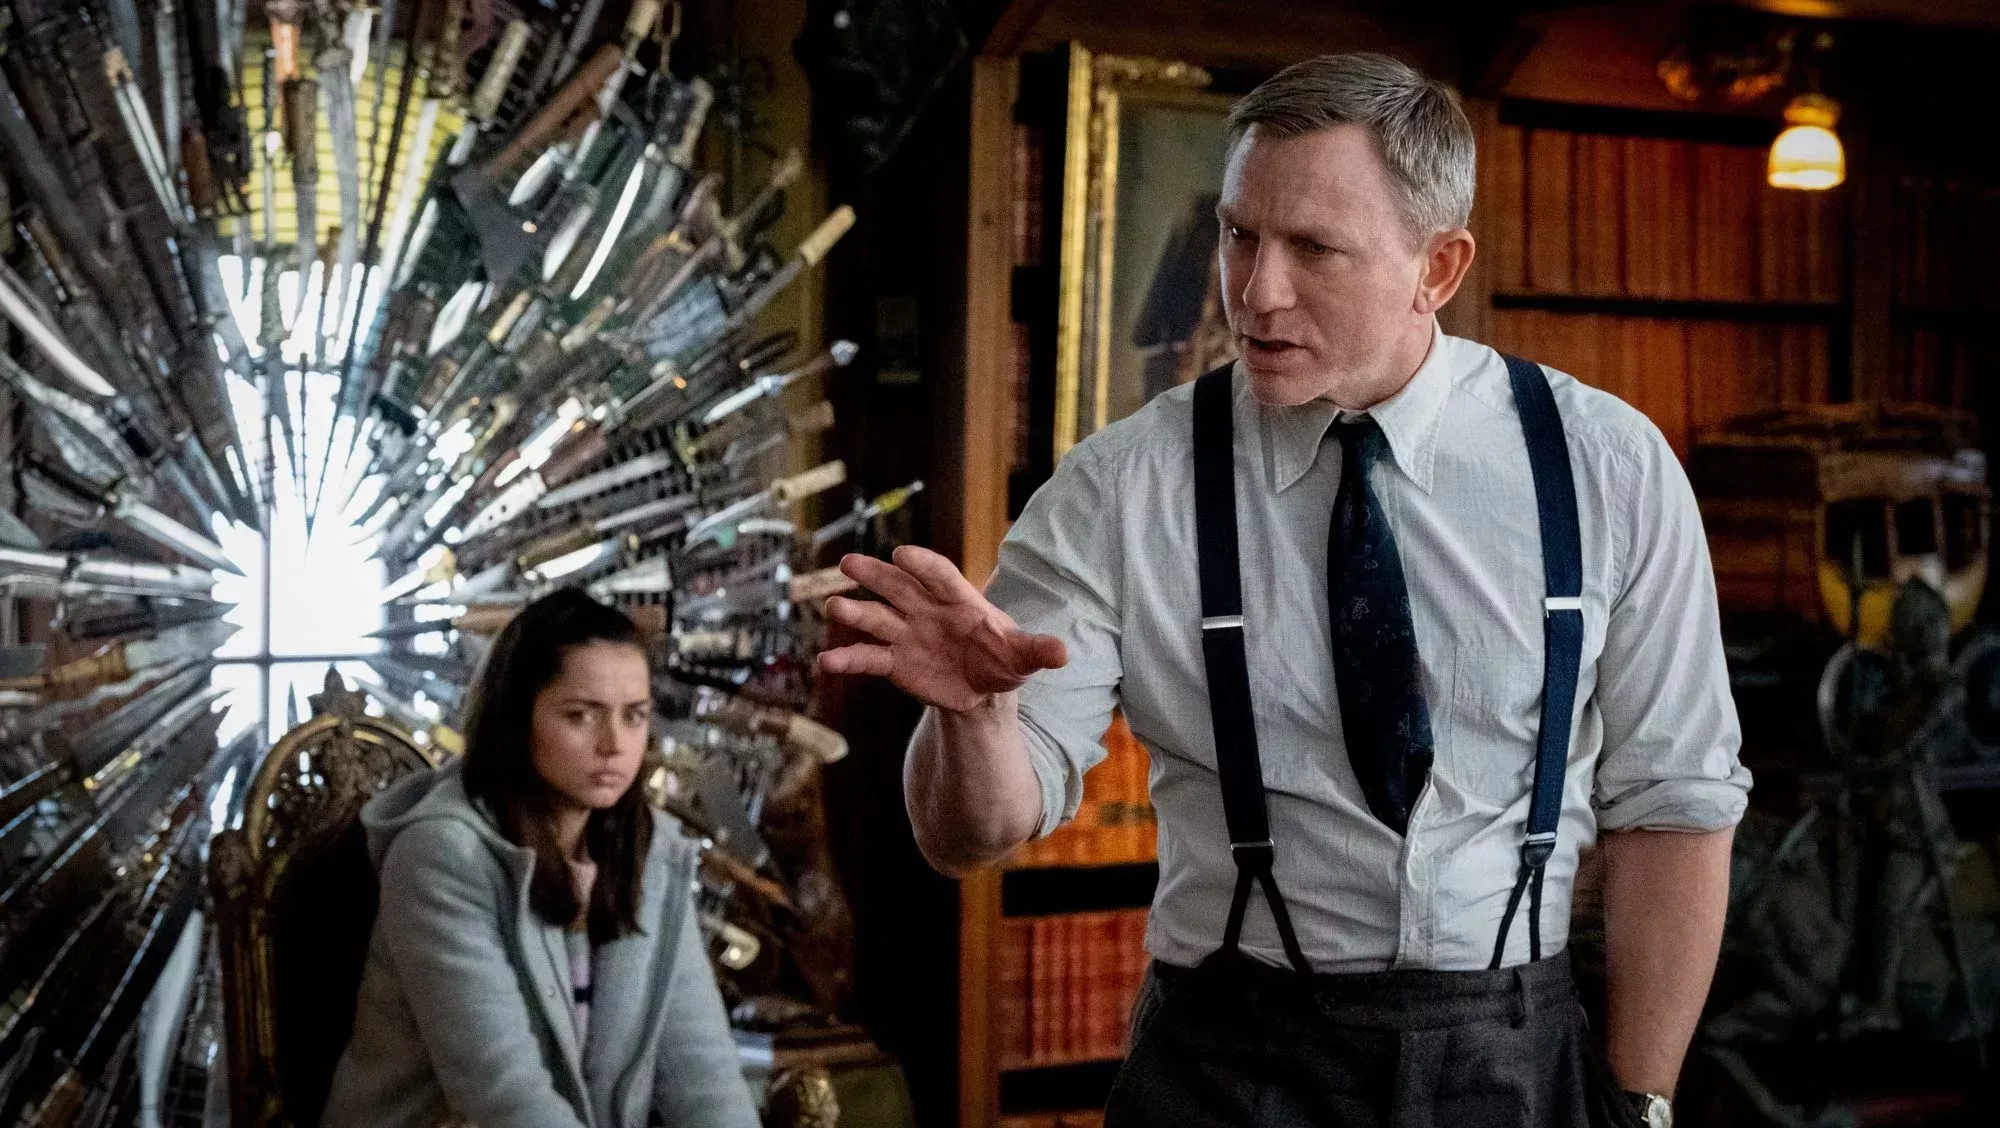 El director de Knives Out confirma que el personaje de Daniel Craig es homosexual